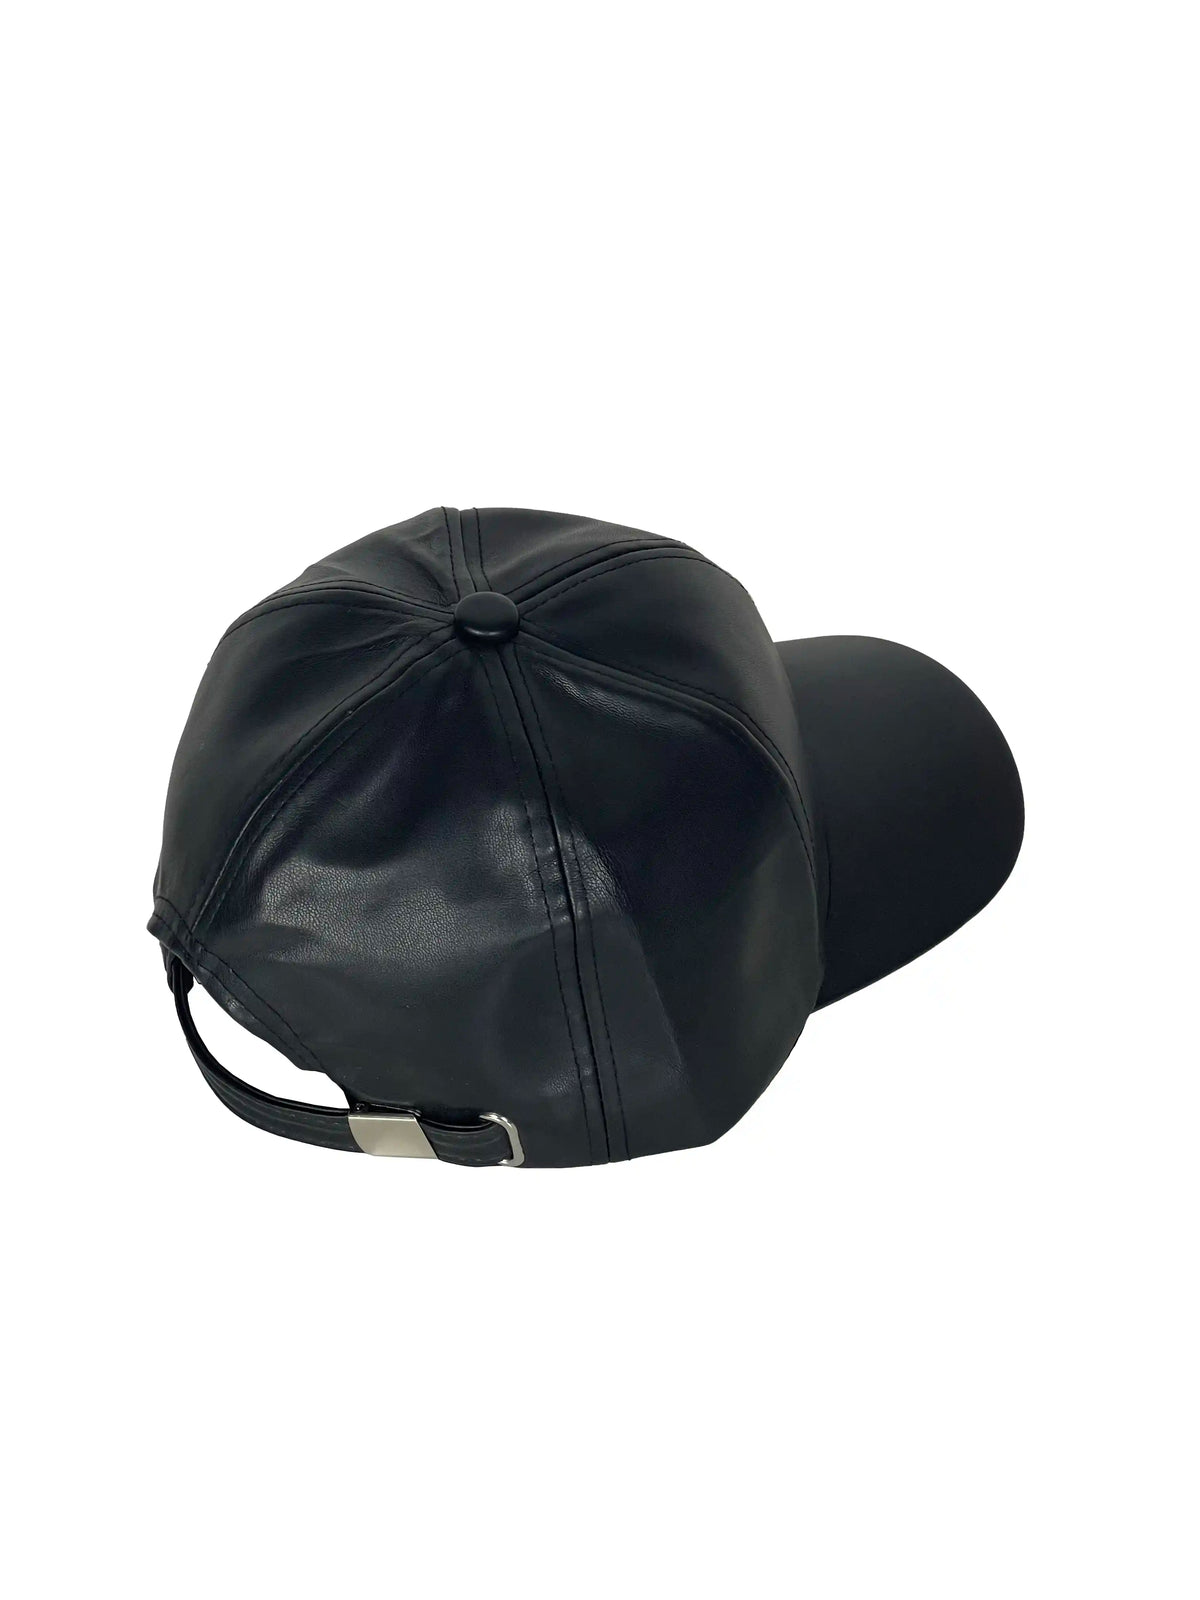 Yankees Black - Cappello in ecopelle con visiera